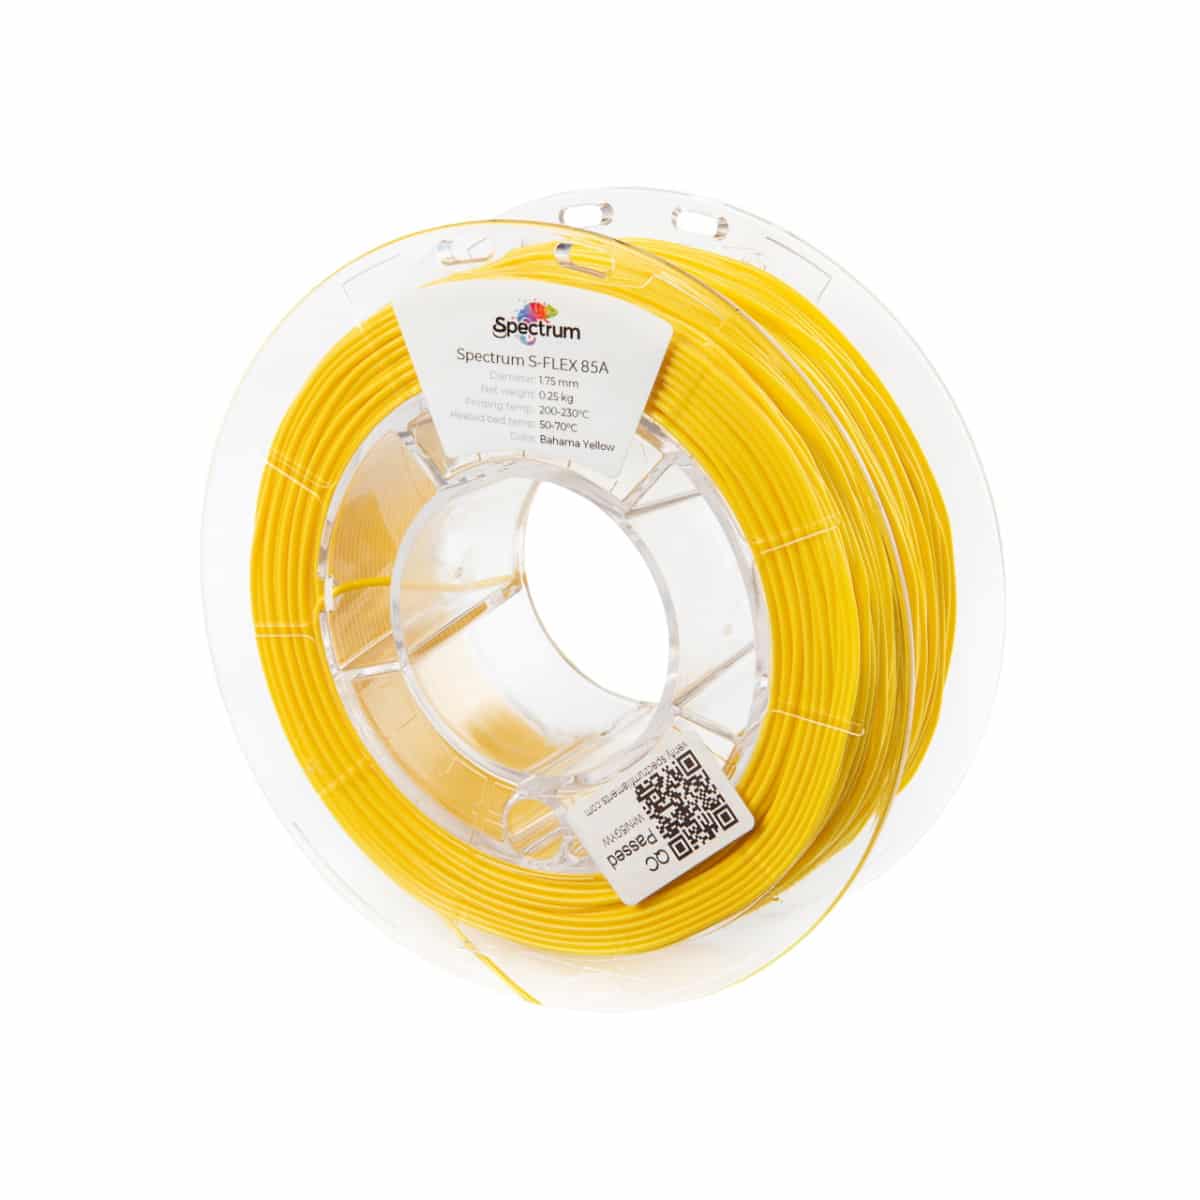 Køb Spectrum Filaments - S-Flex 85A - 1.75mm - Bahama Yellow - 0.25kg filament - Pris 140.00 kr.